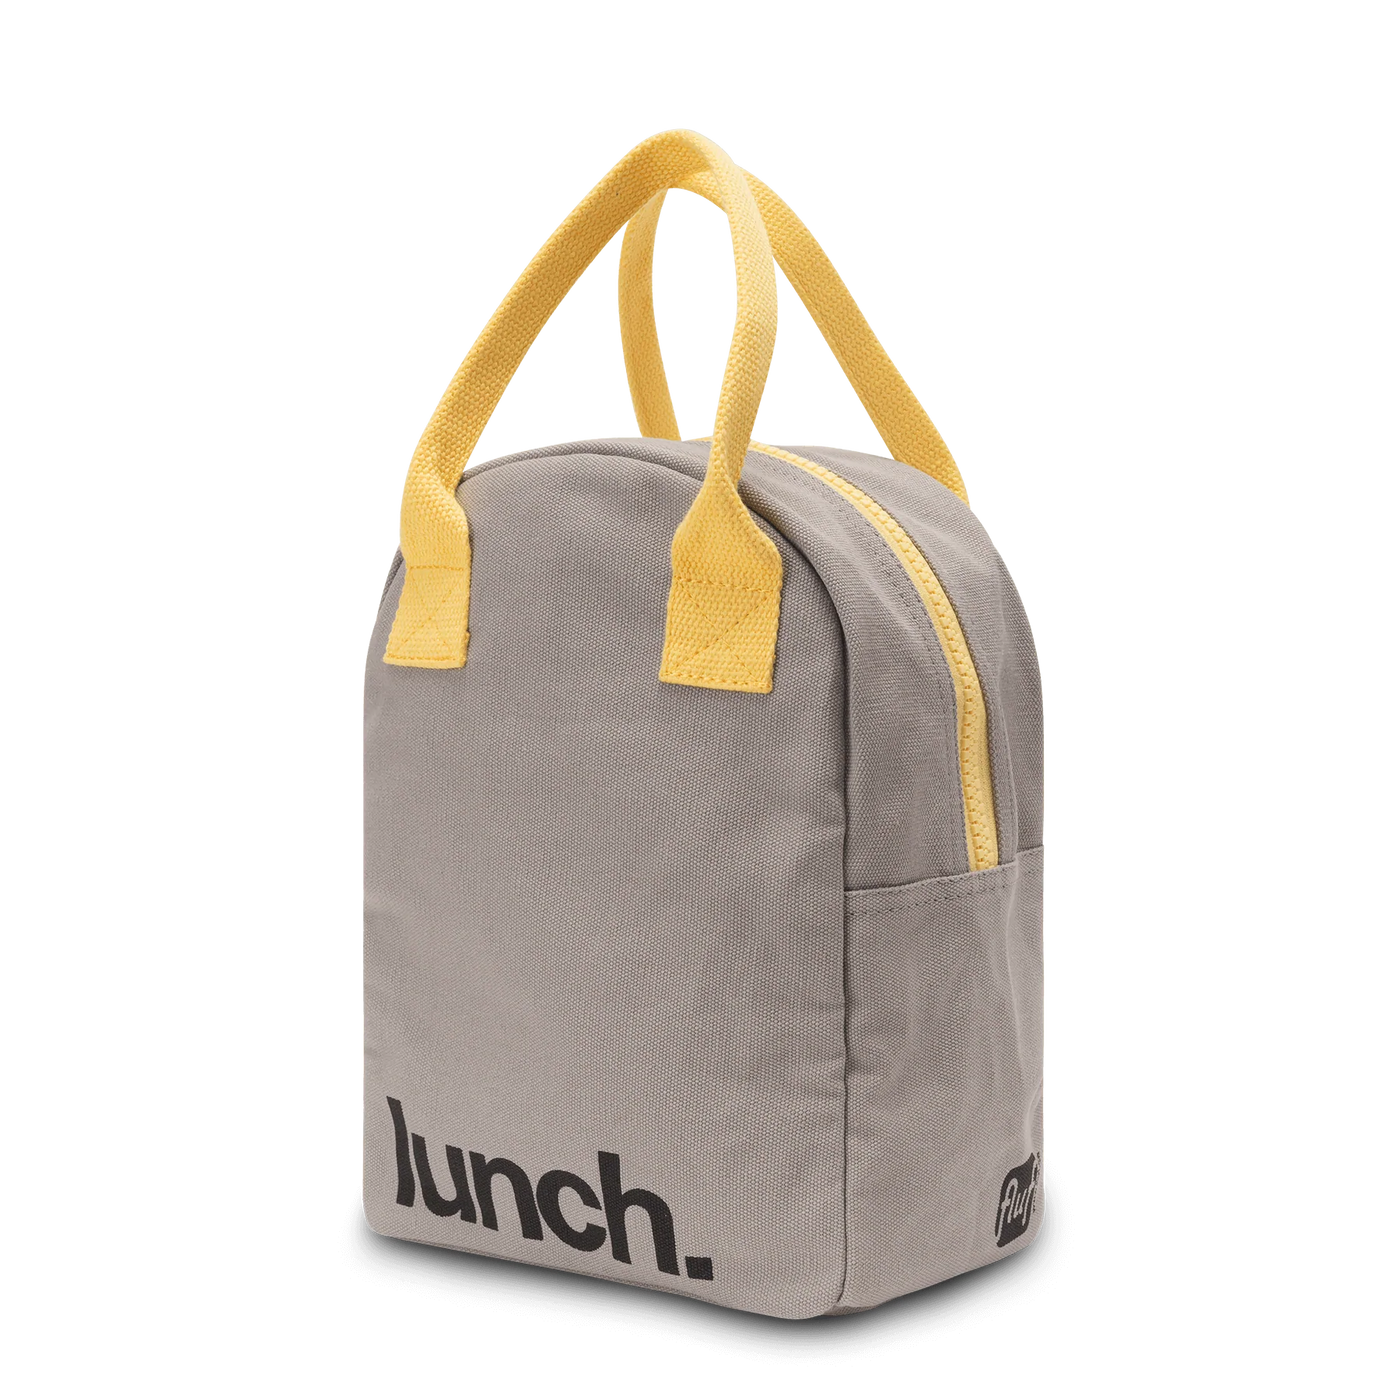 Fluf Lunch Bag With Zipper - Grey